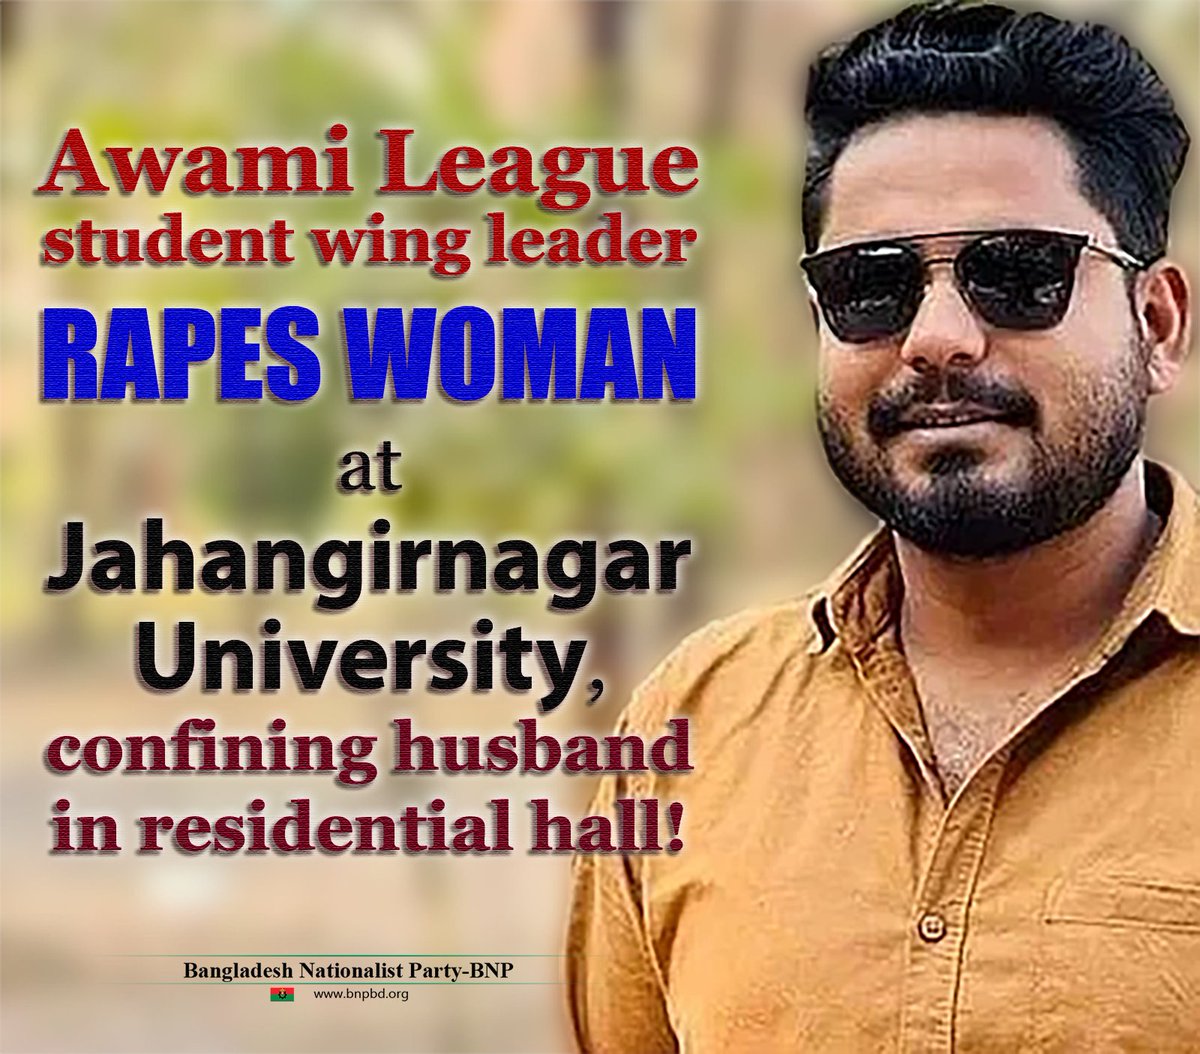 Mustafizur Rahman, the international affairs secretary of @albd1971 student wing (BCL), raped a woman on the Jahangirnagar University (JU) campus, confining her husband in a residential hall. en.prothomalo.com/bangladesh/i87…